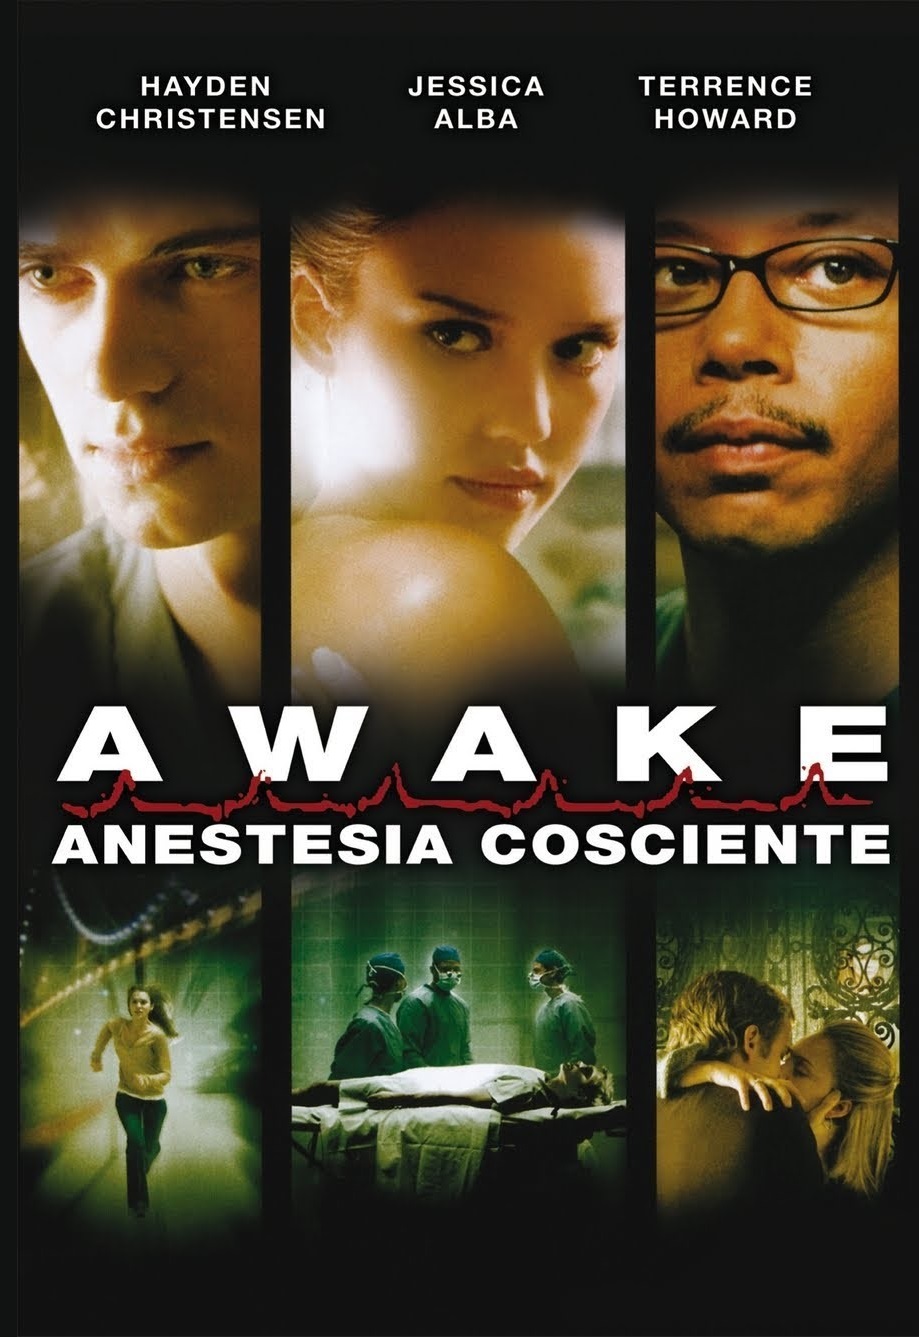 Awake – Anestesia Cosciente [HD] (2007)